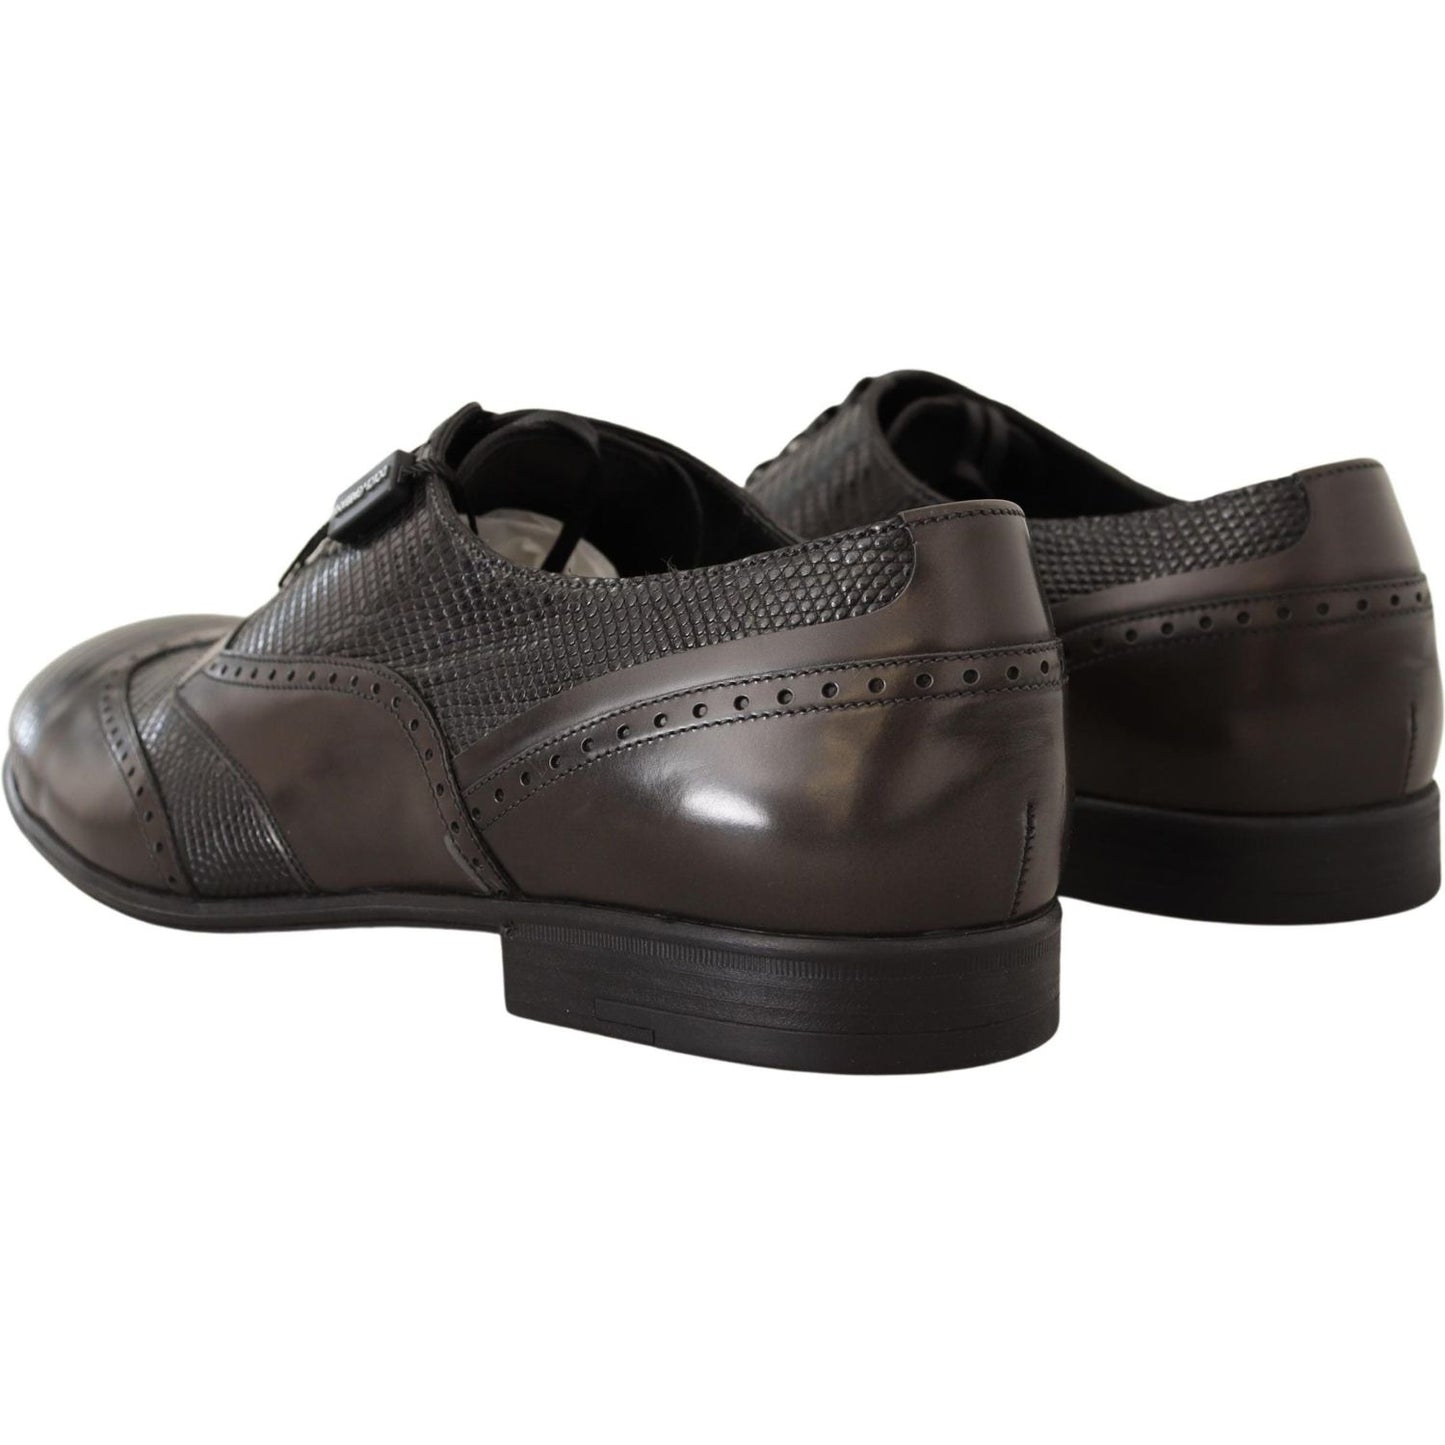 Dolce & Gabbana Elegant Brown Lizard Leather Oxford Shoes brown-lizard-skin-leather-oxford-dress-shoes Dress Shoes IMG_9978-scaled-ac8a11d1-64a.jpg